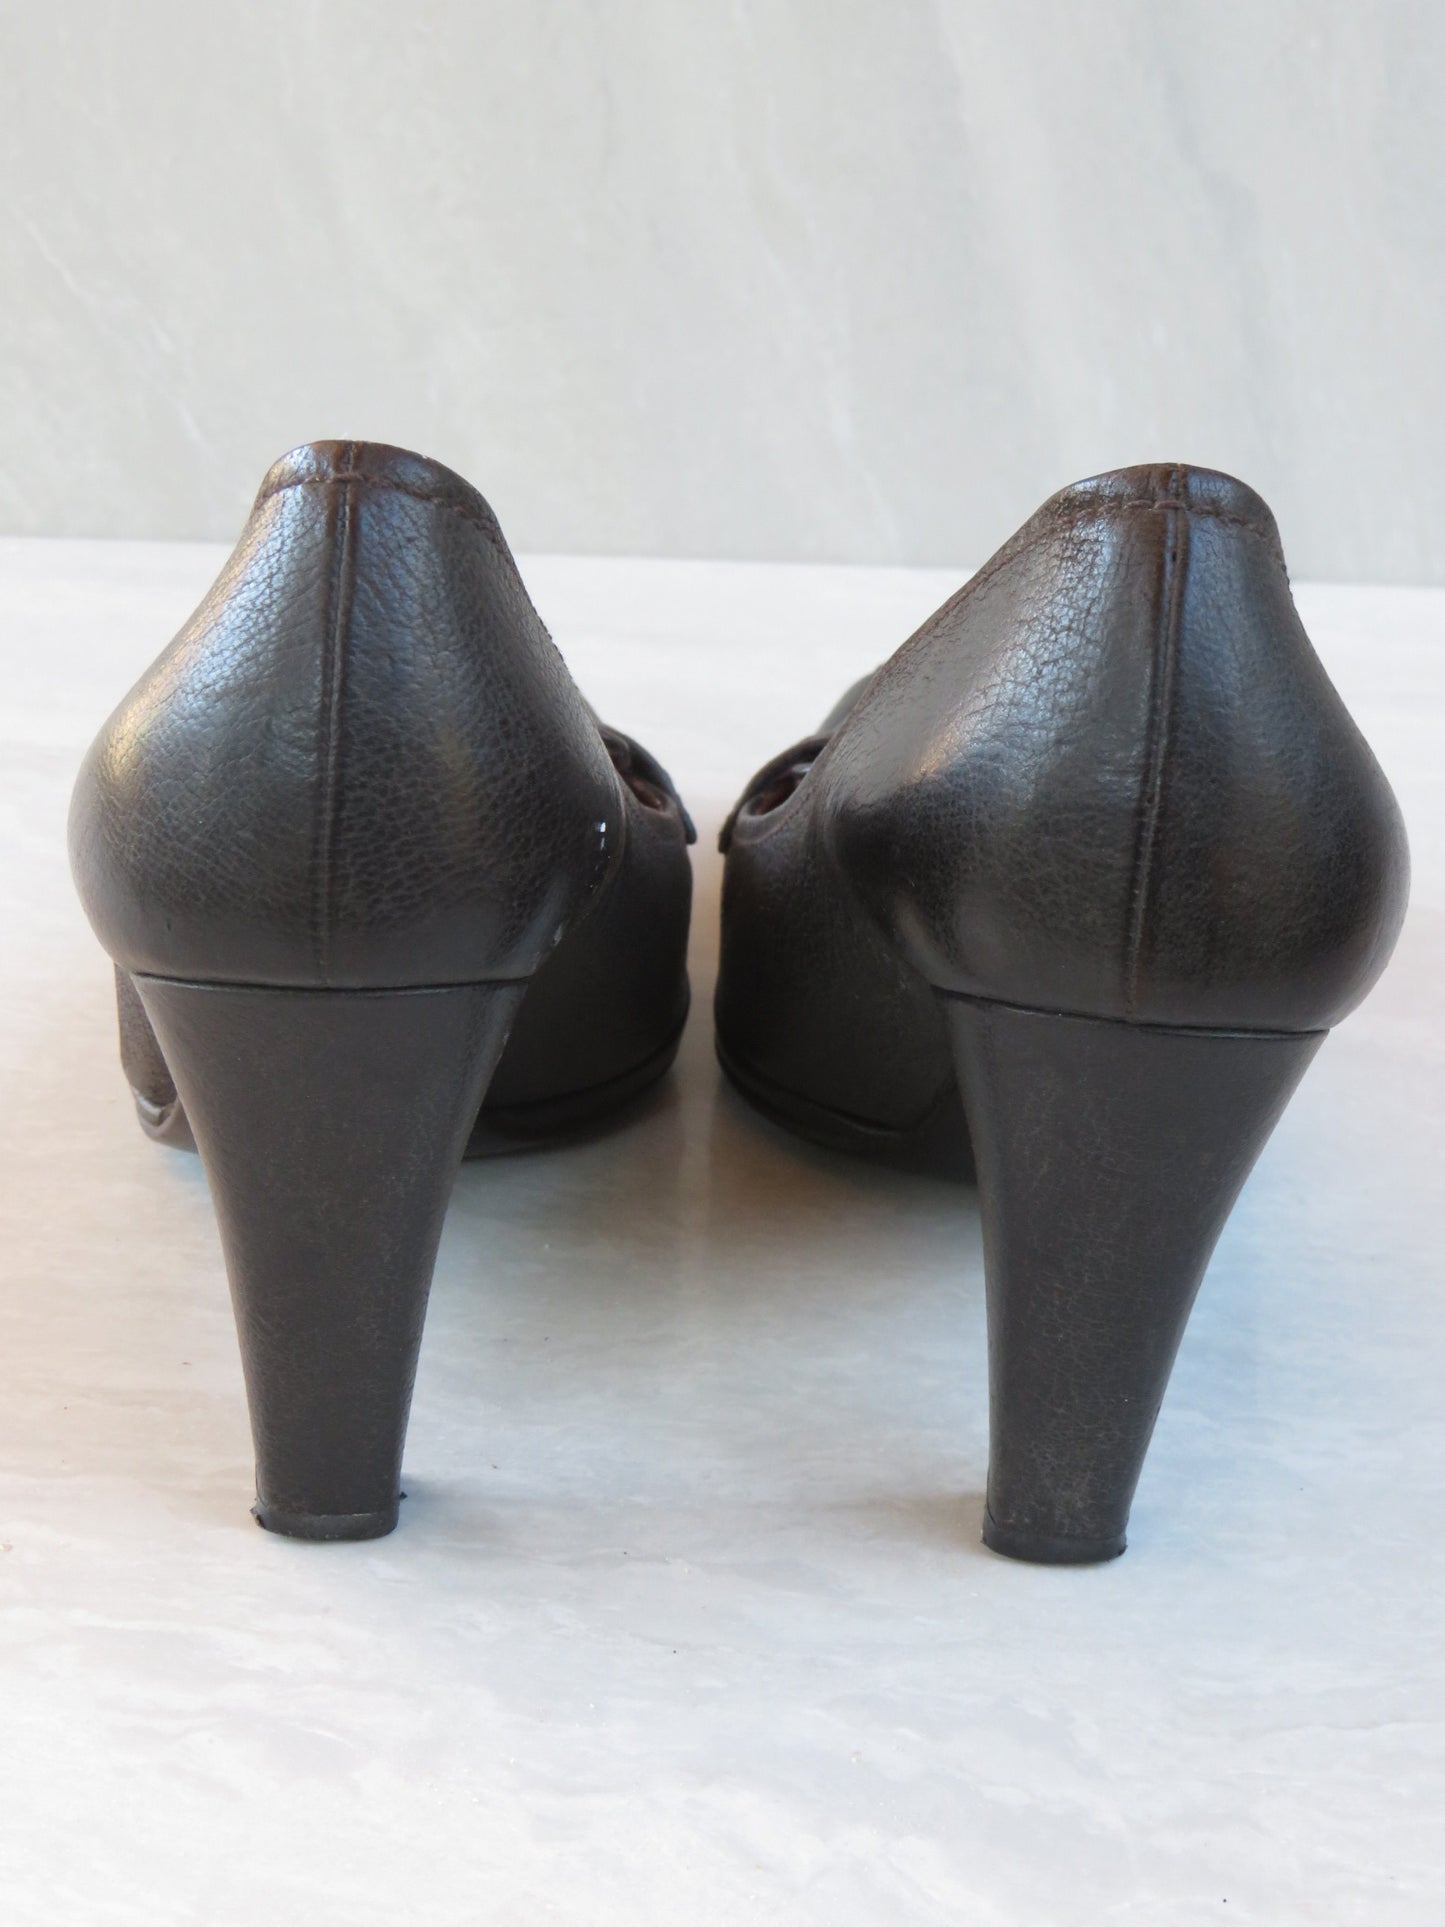 Prada Brown heeled Loafers